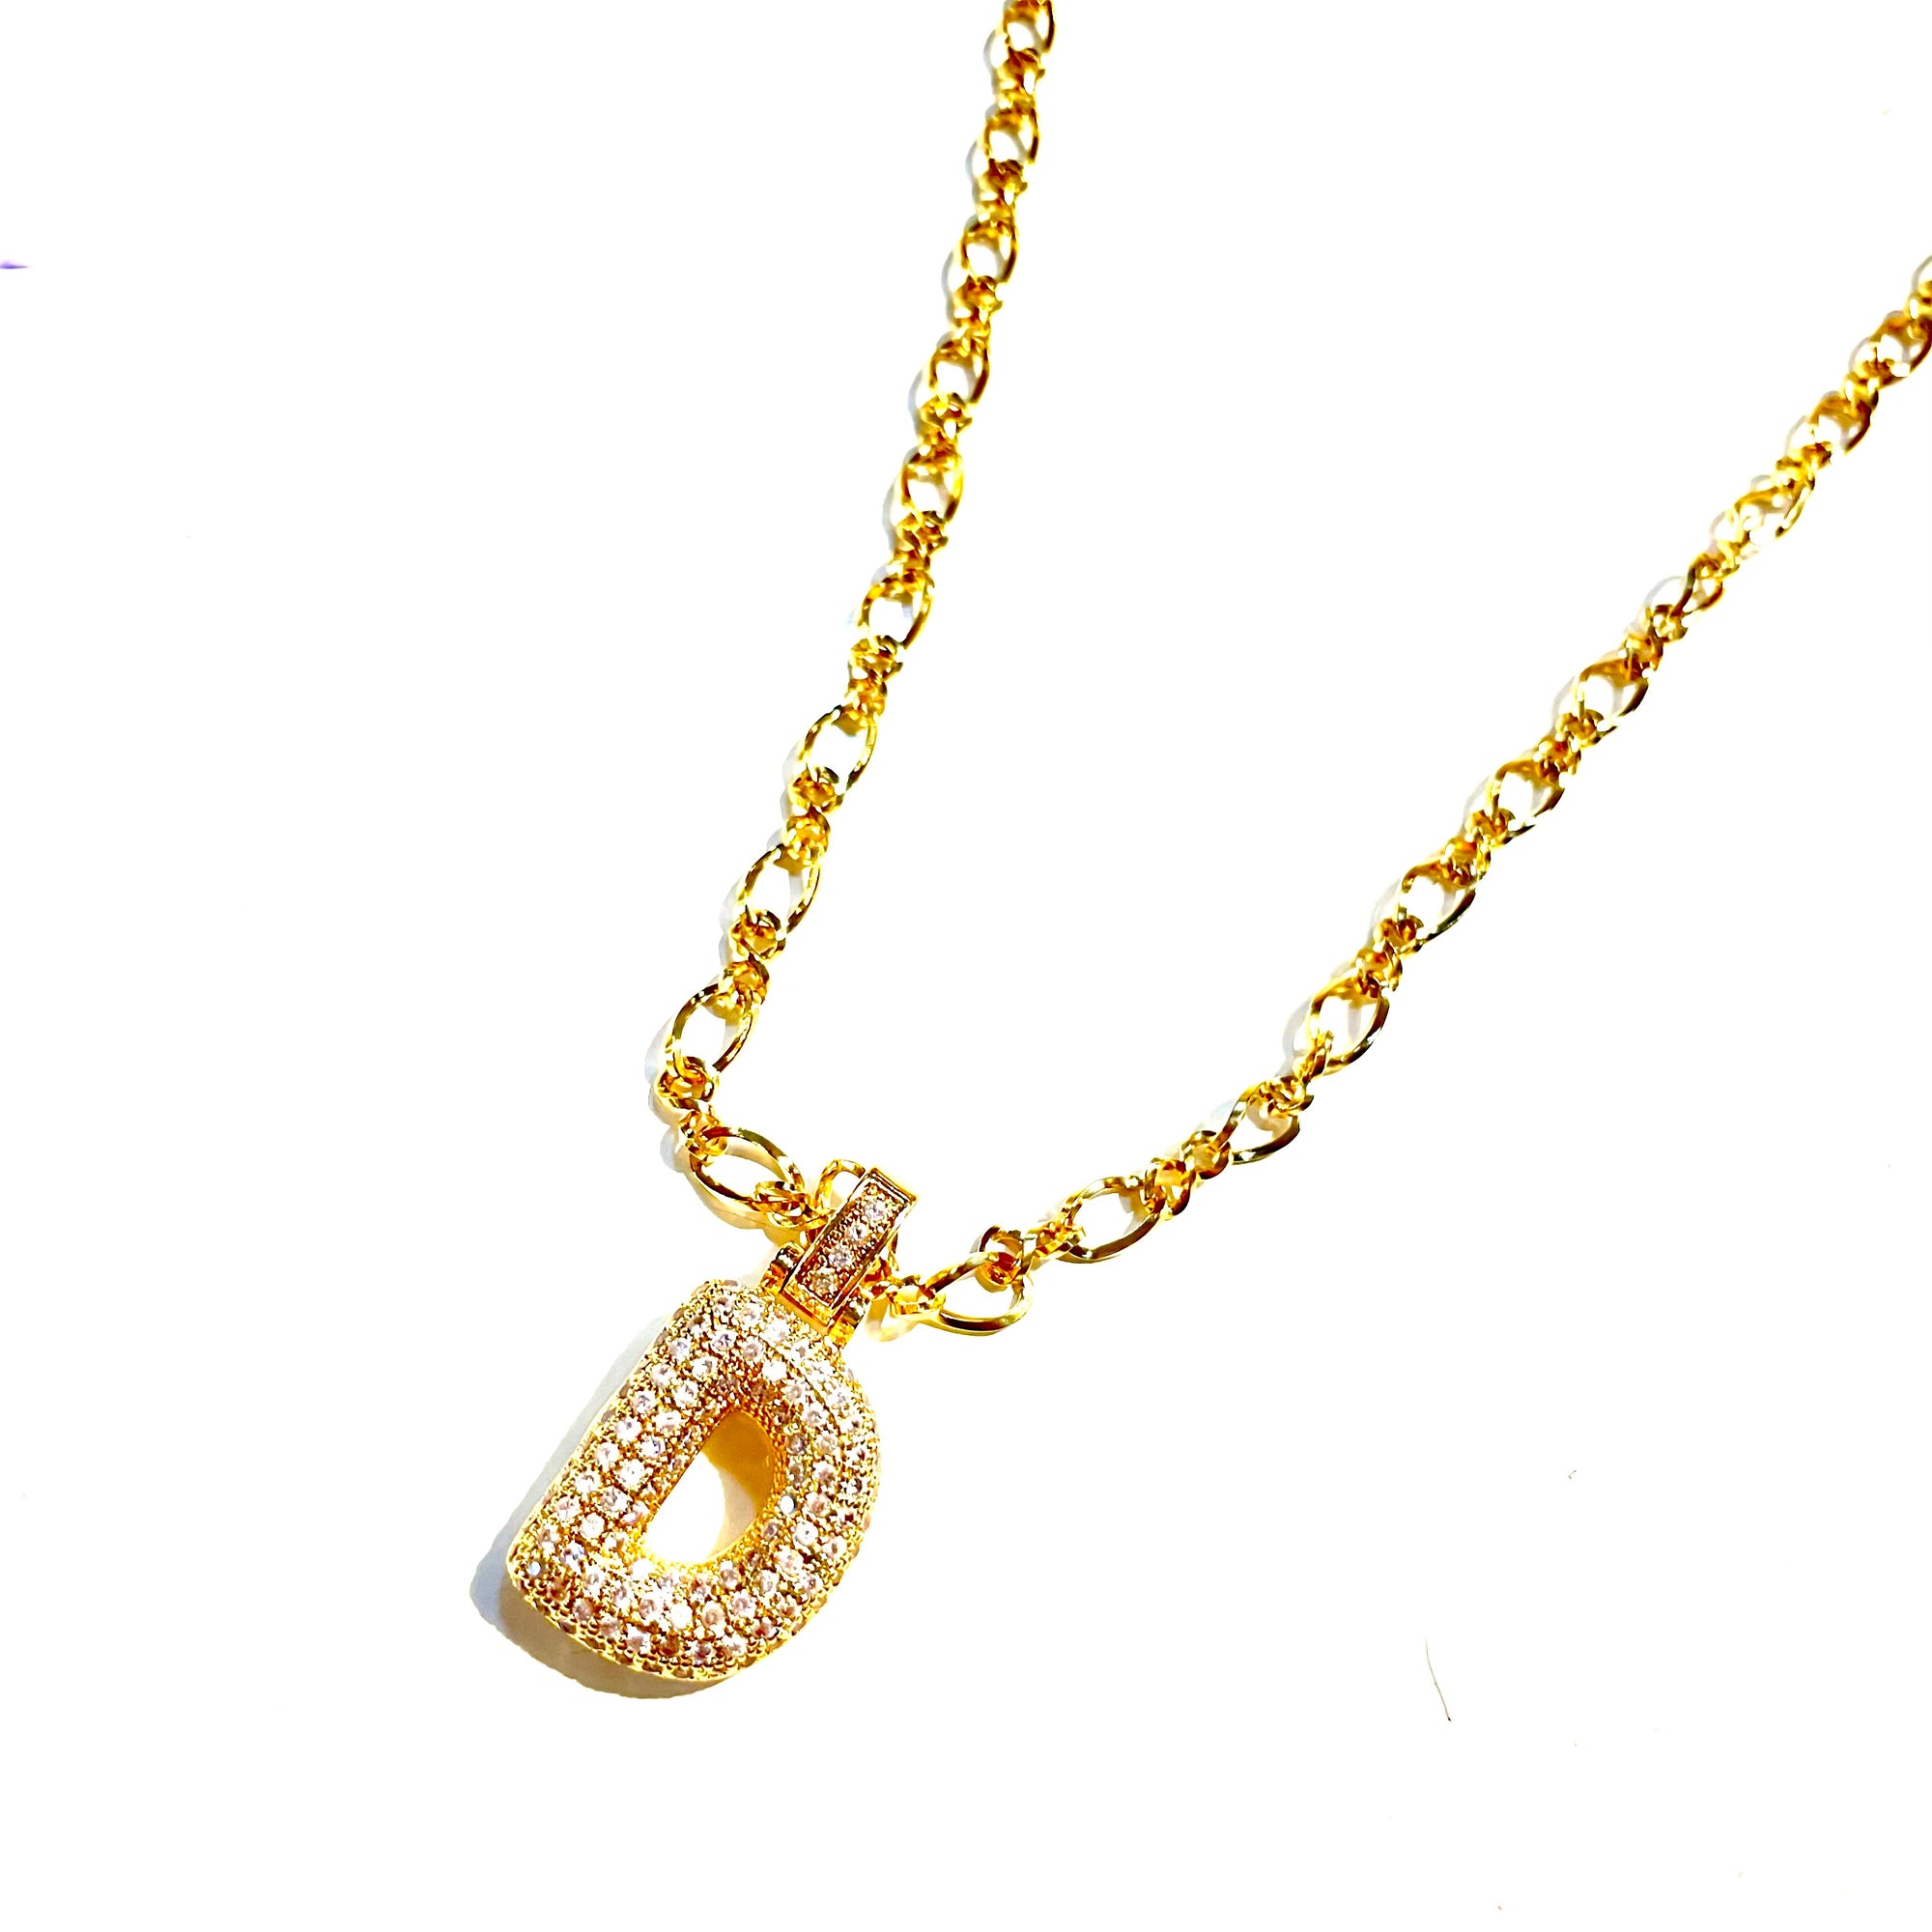 Initial Impression Necklace Necklaces Cerese D, Inc. Gold D 